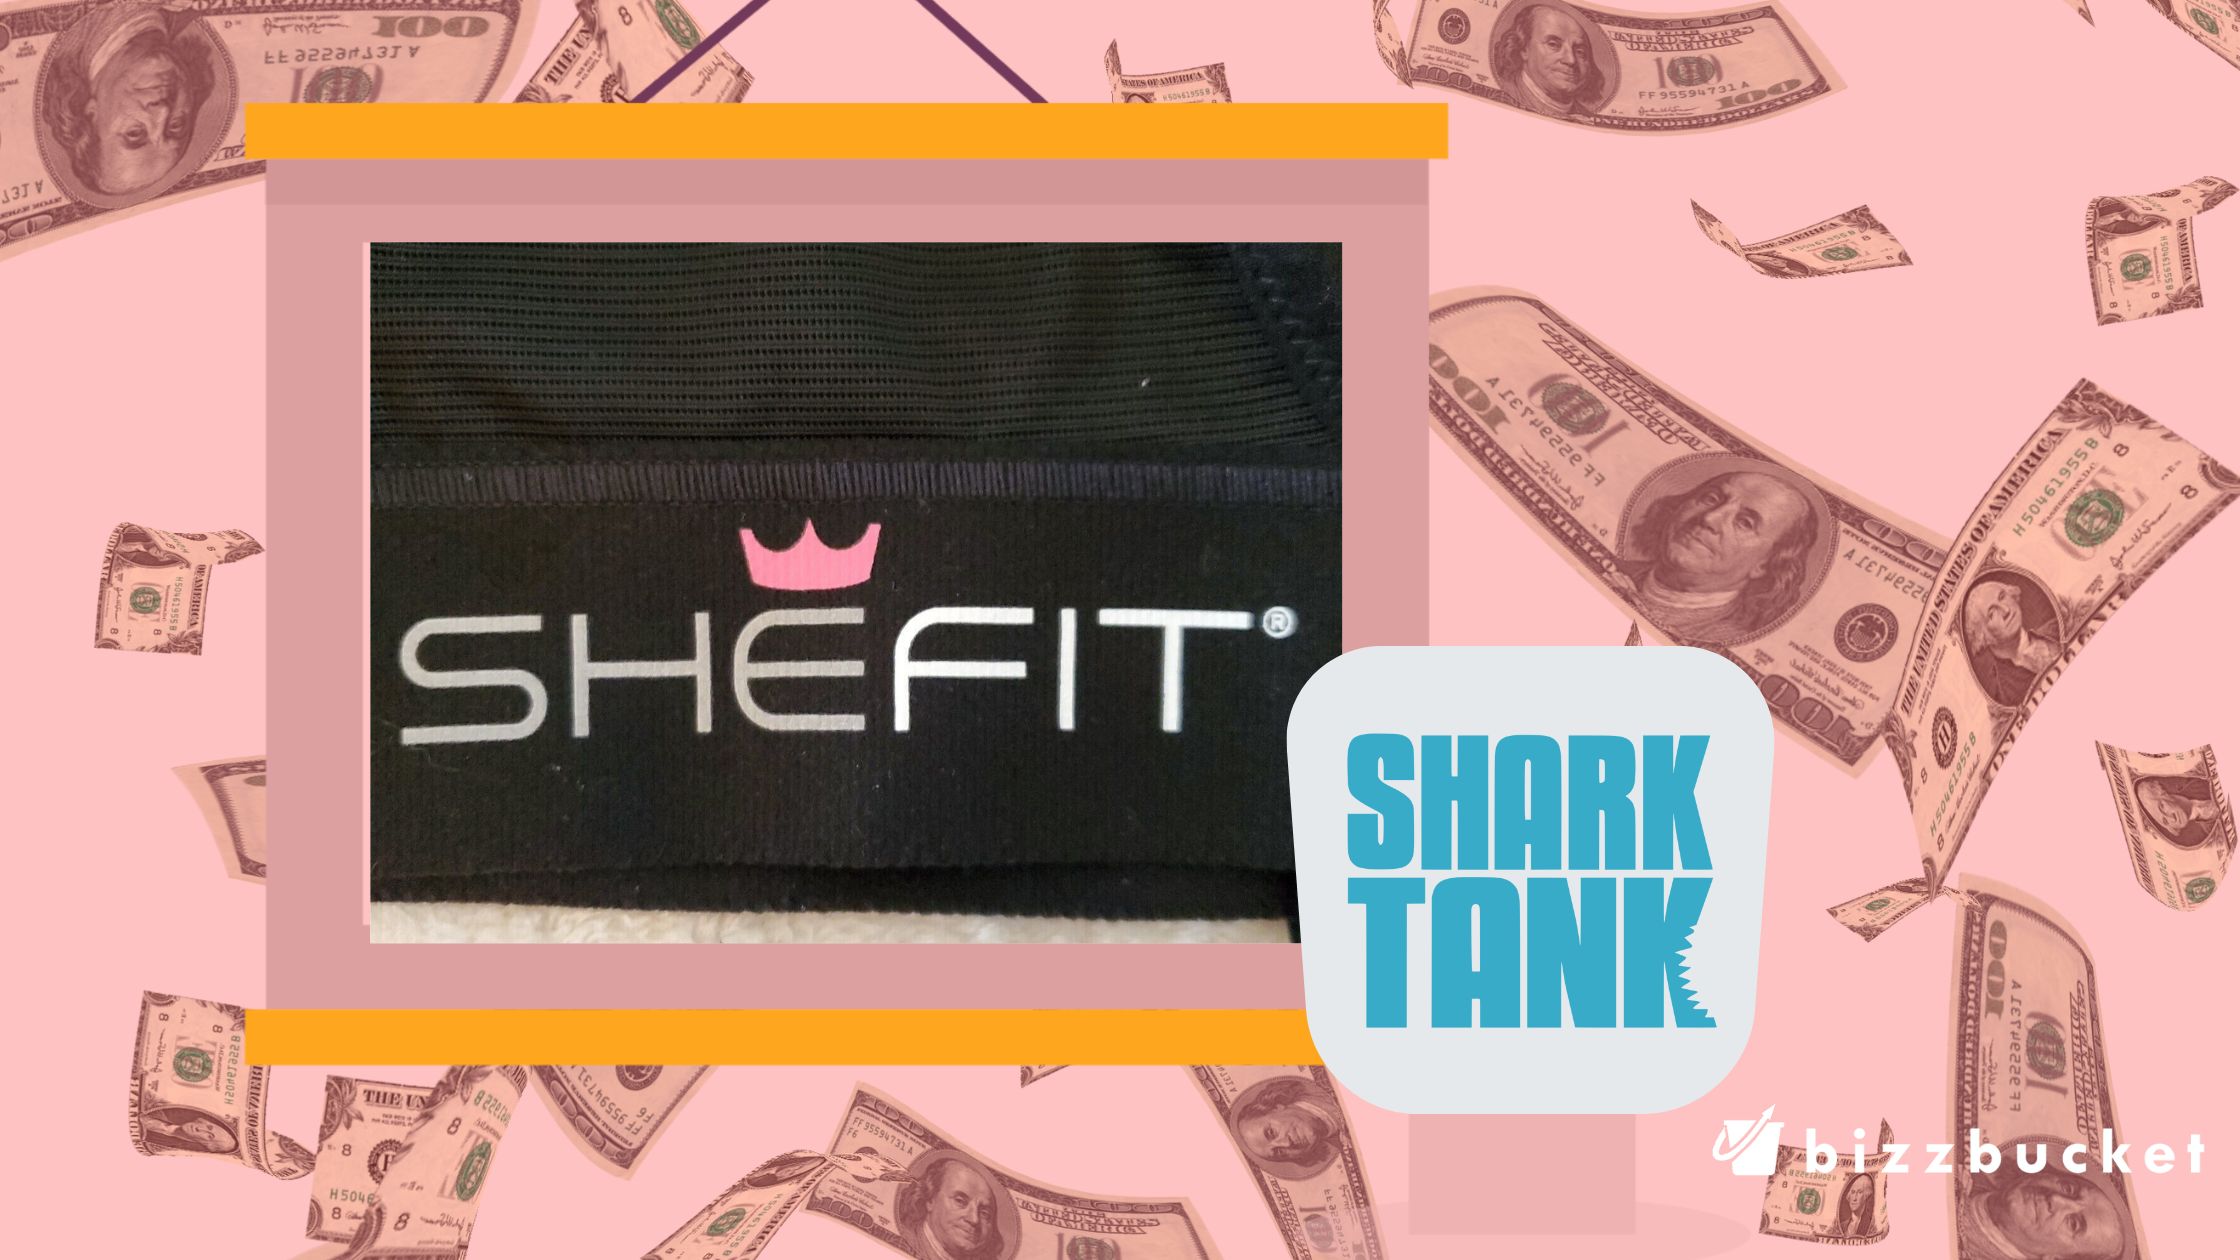 SheFit shark tank